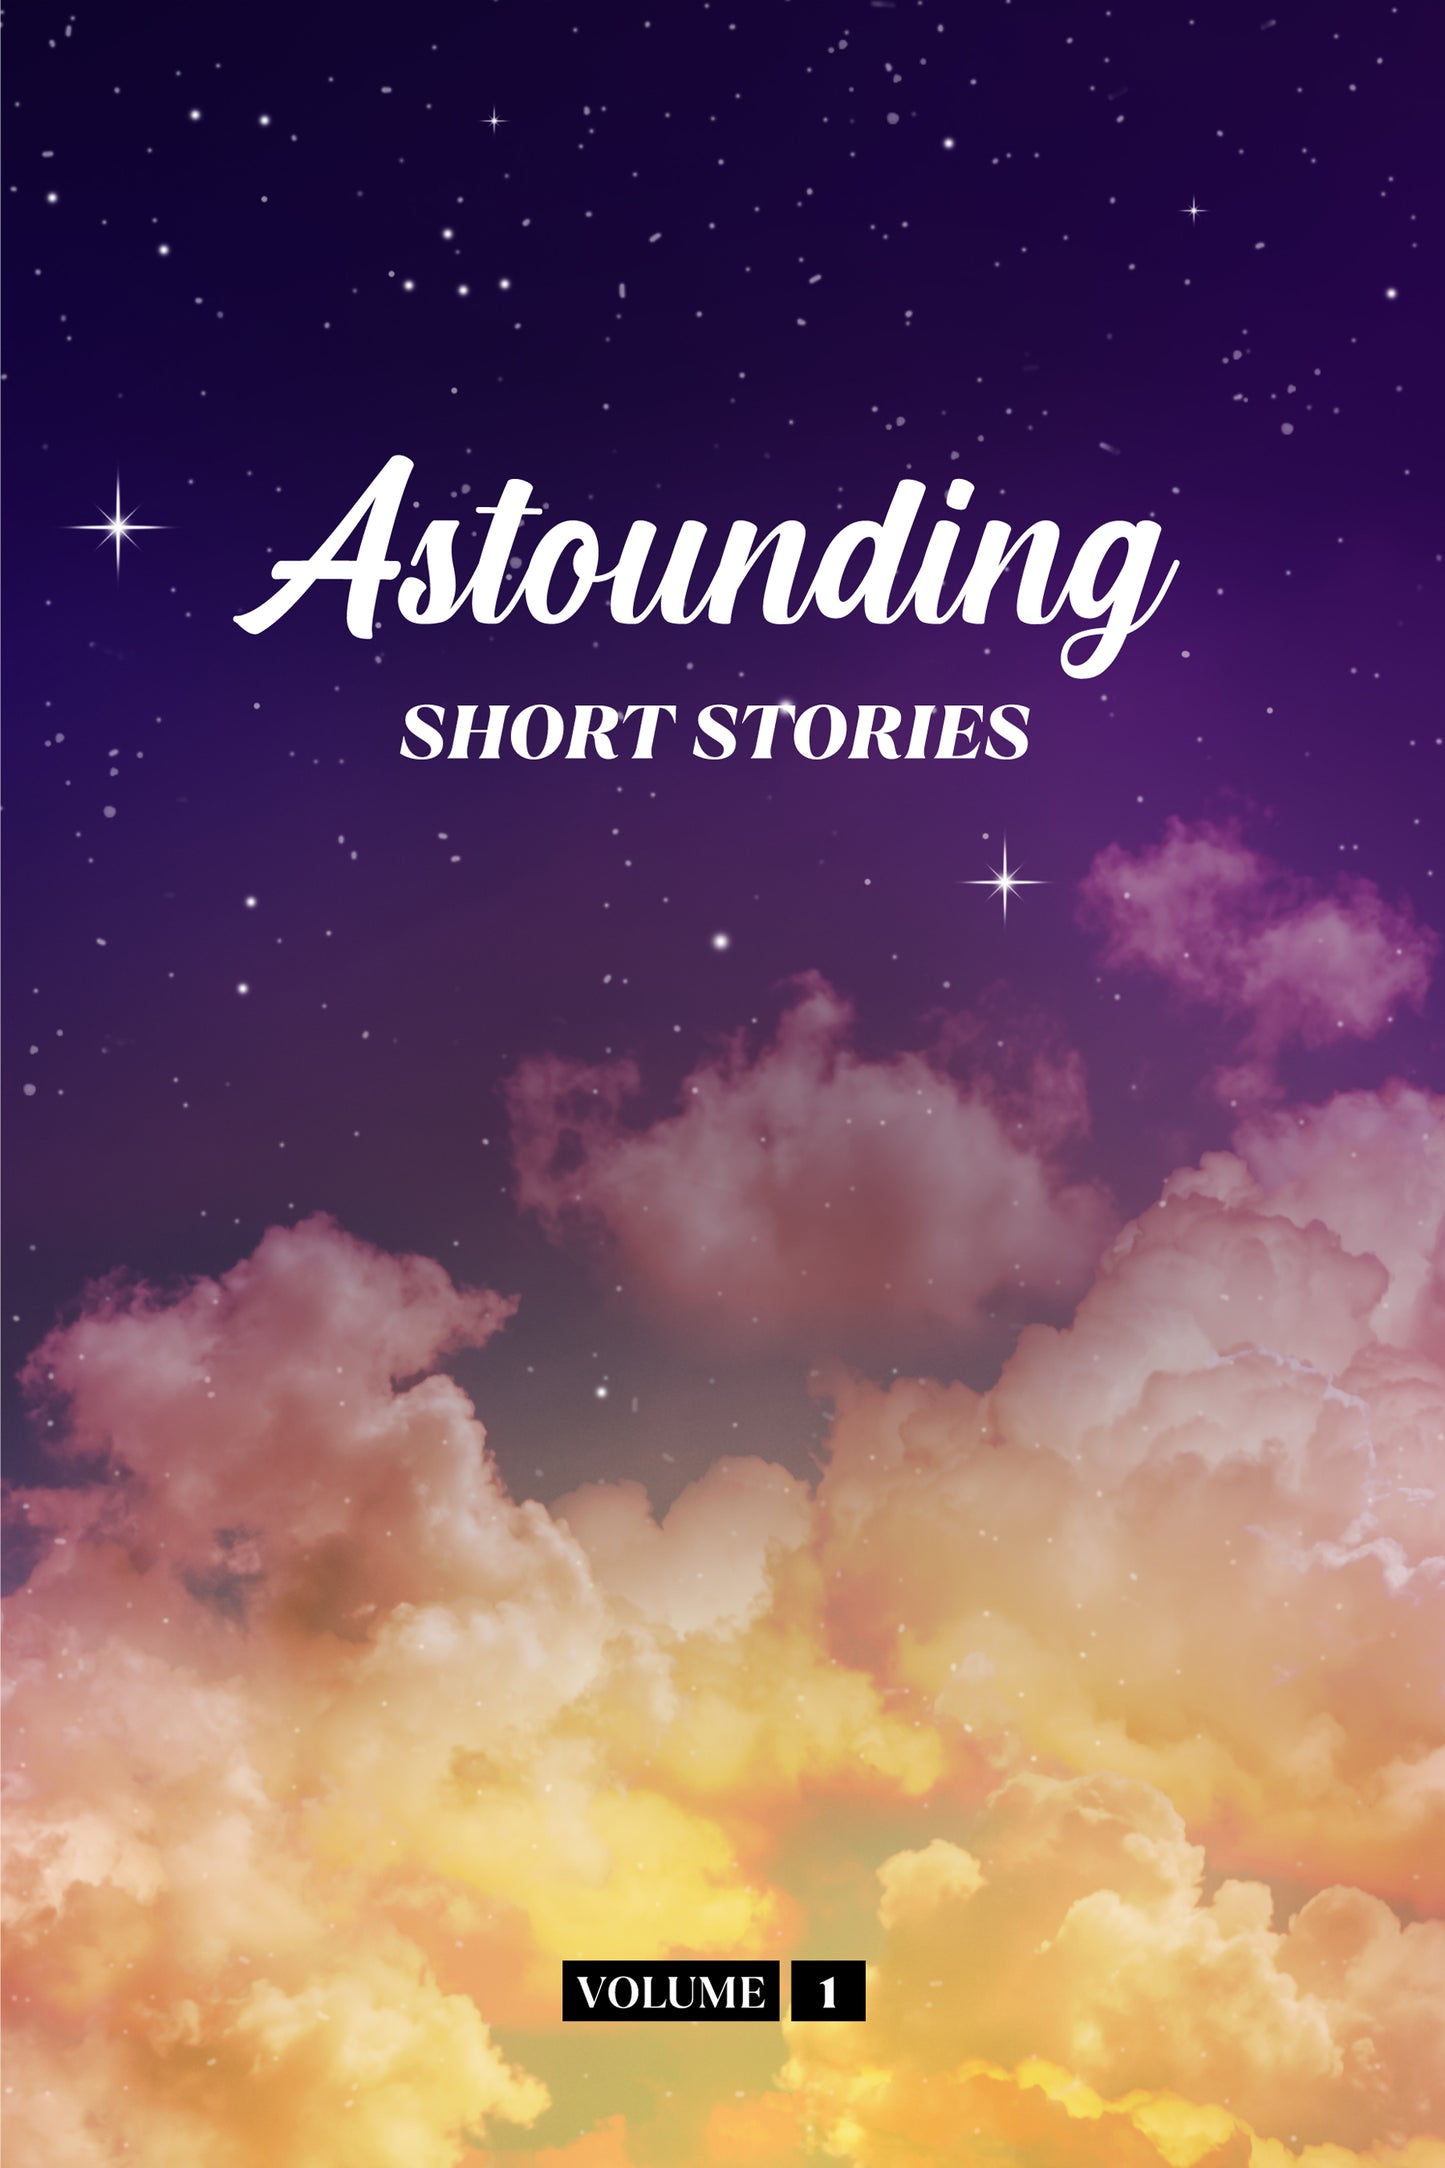 Astounding Short Stories Volume 1 (Physical Book)